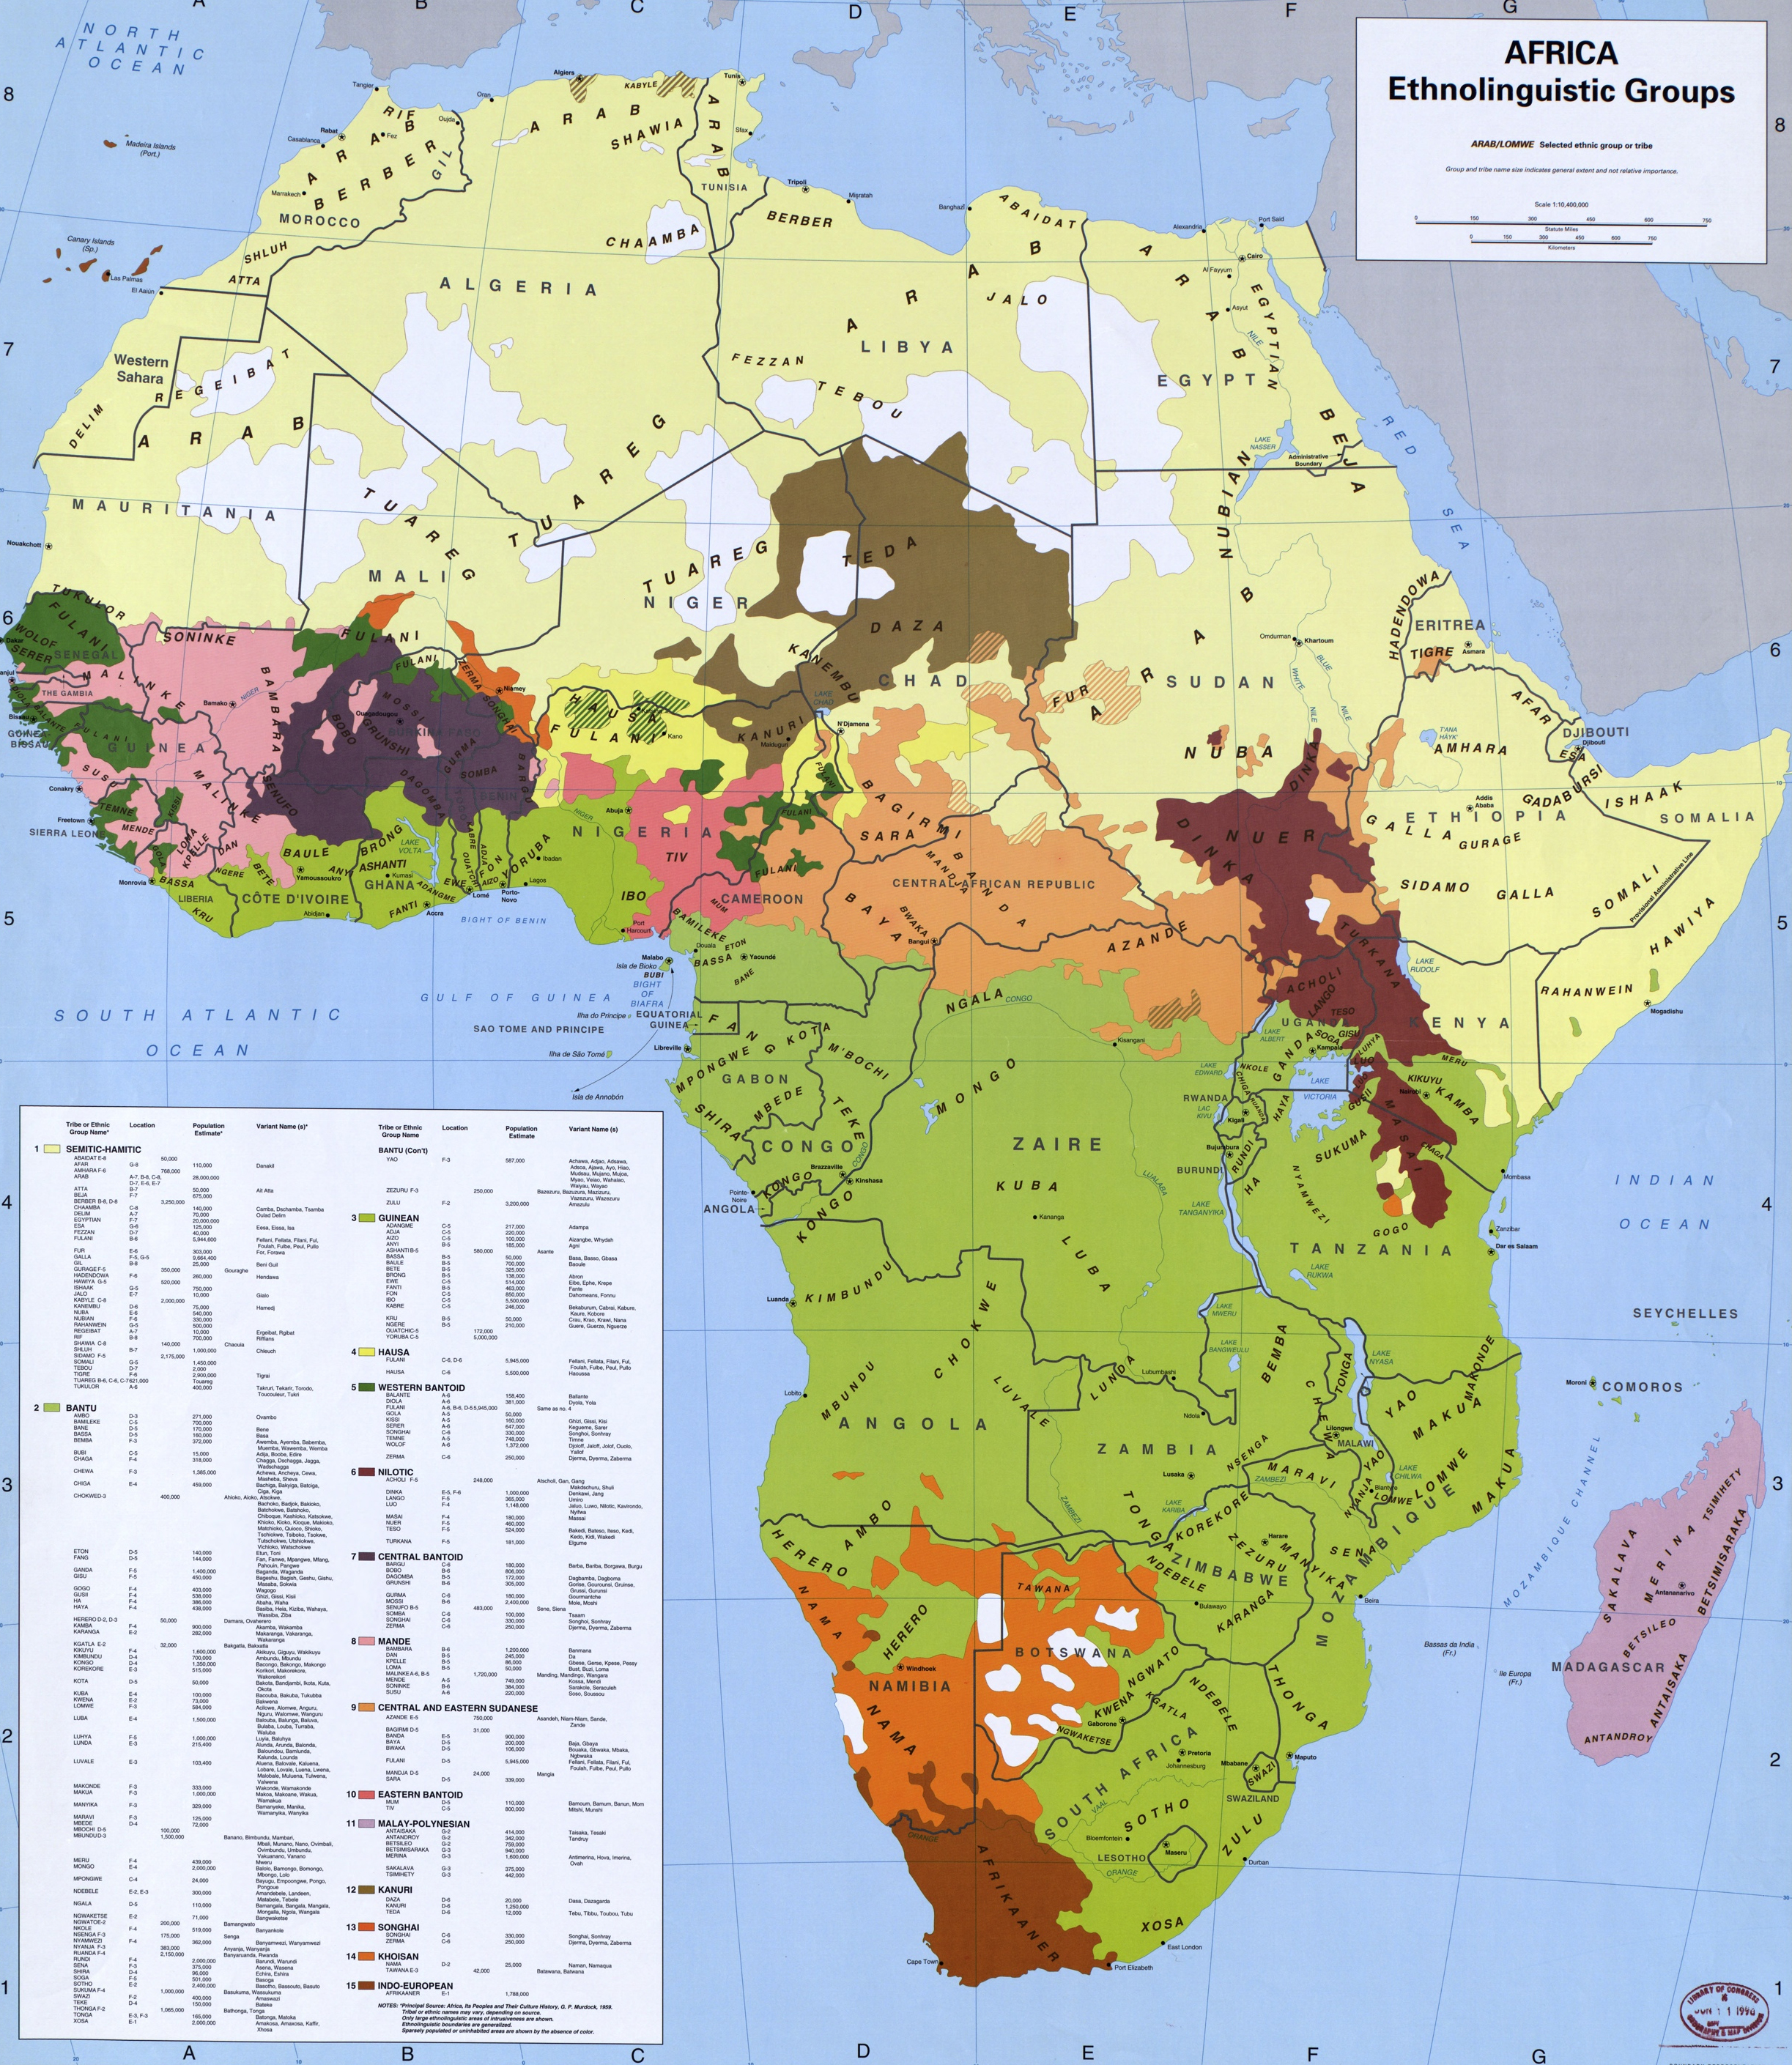 Africa_ethnic_groups_1996.jpg